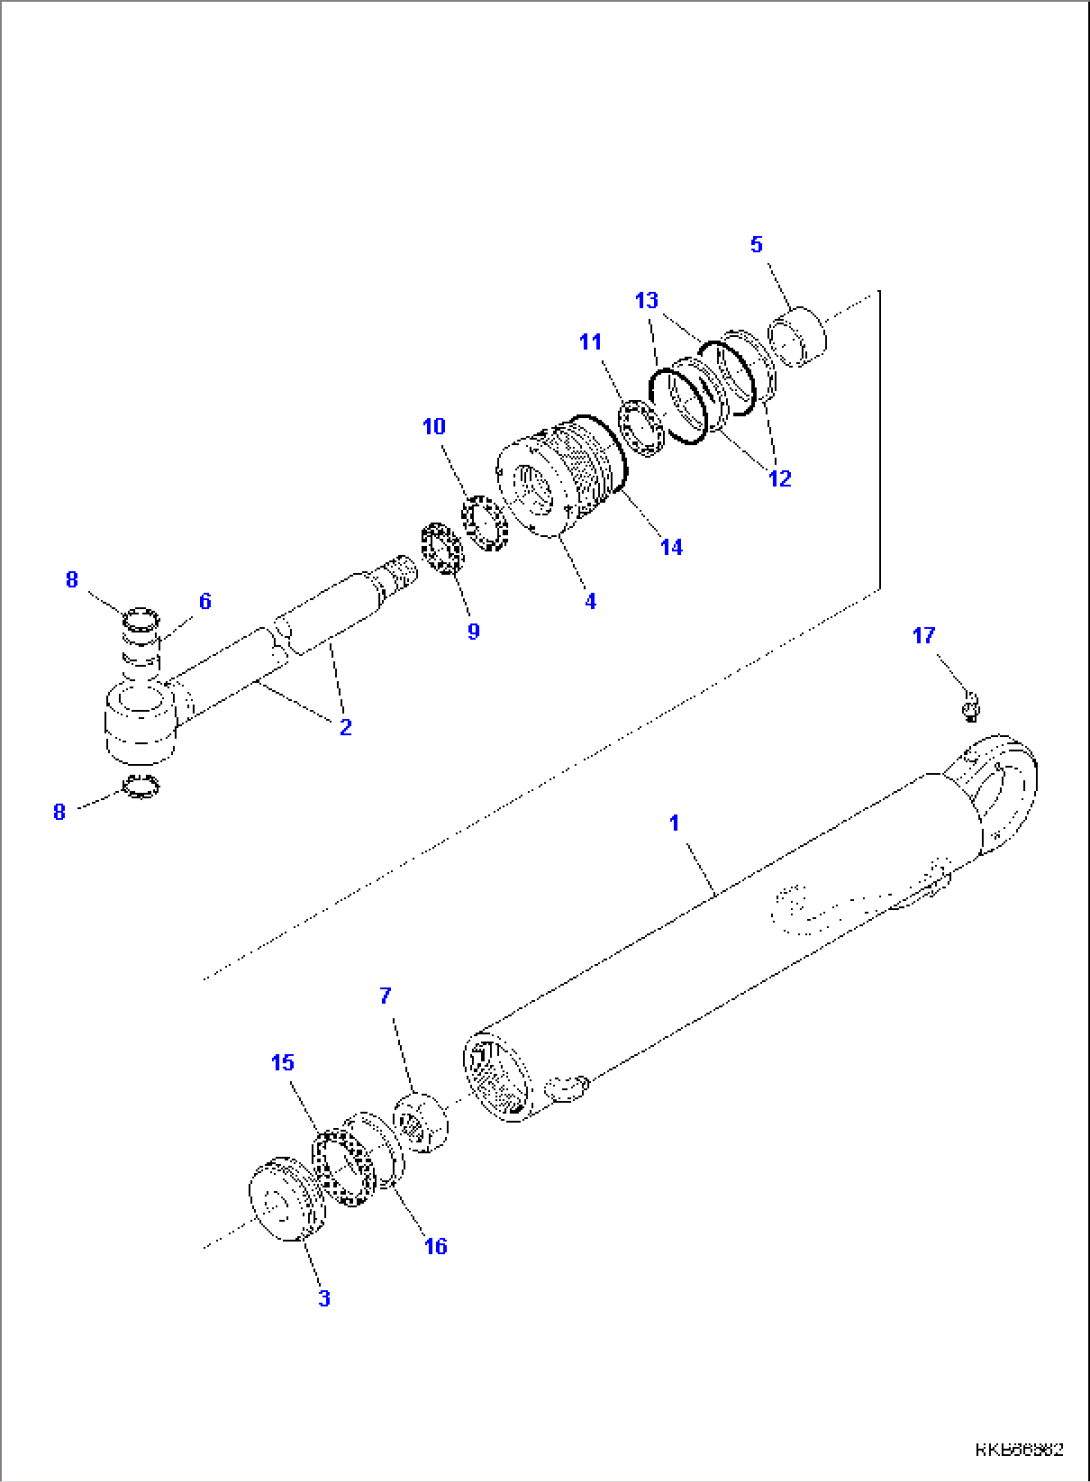 ARM CYLINDER (WITH SIDE DIGGIN BOOM) (2/2)